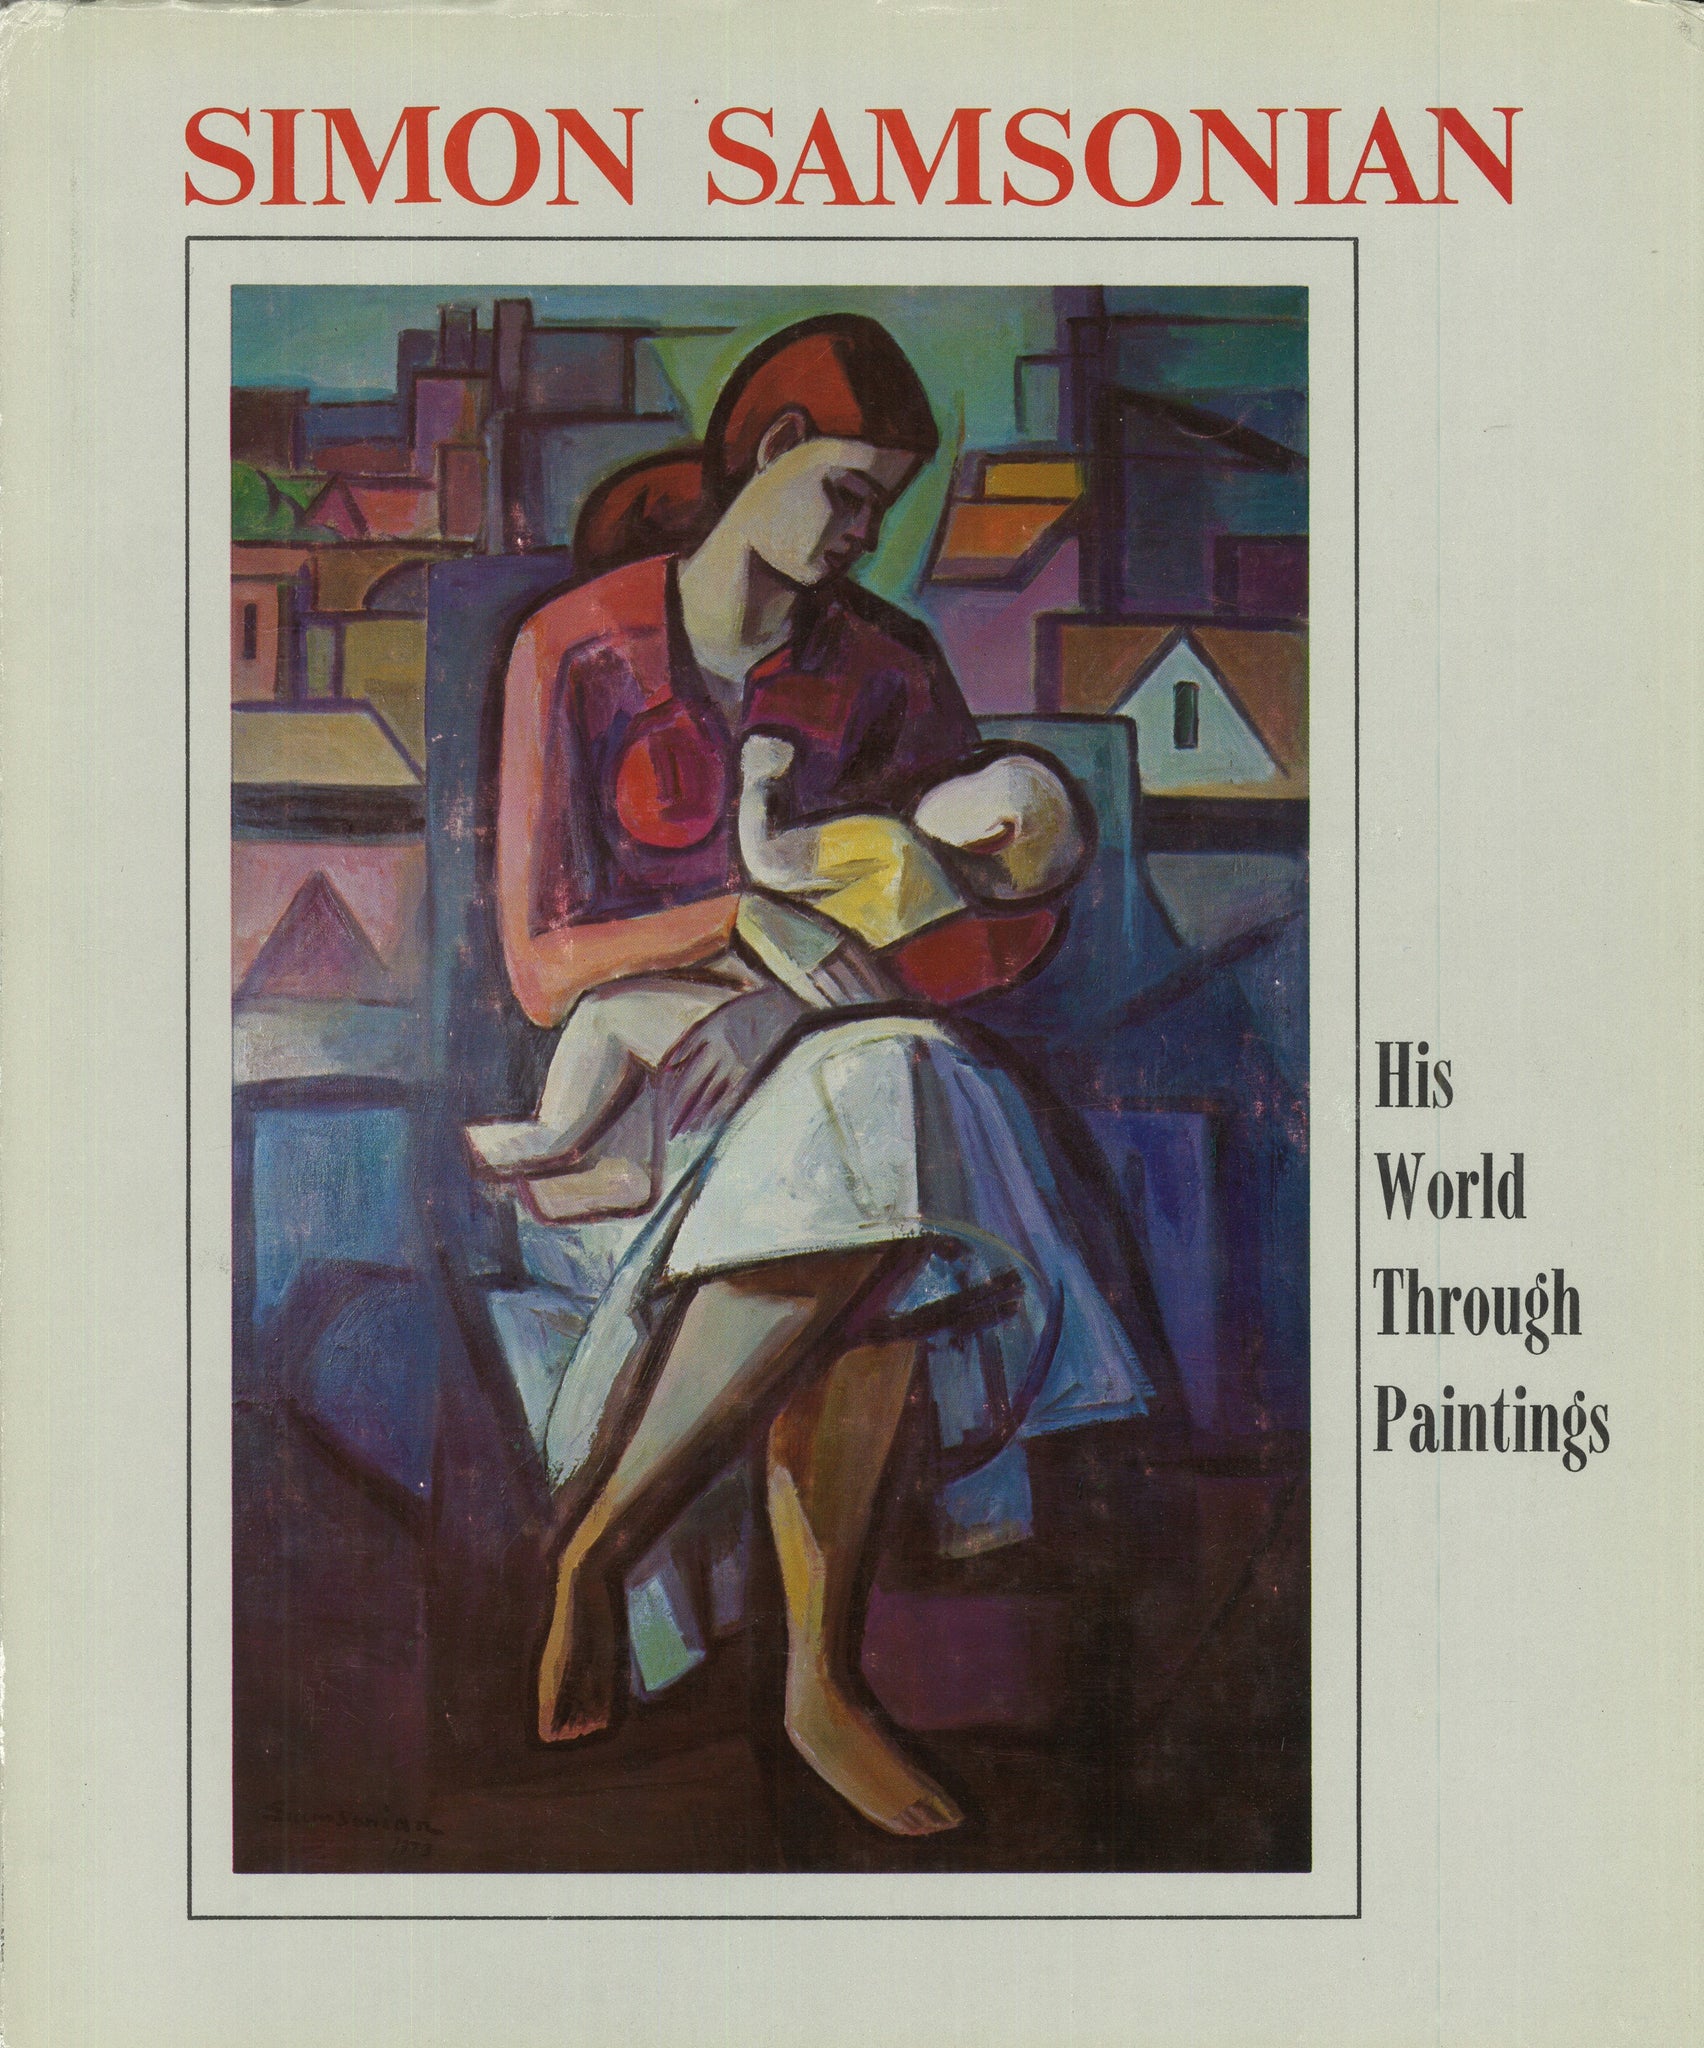 SIMON SAMSONIAN: His World Through Paintings